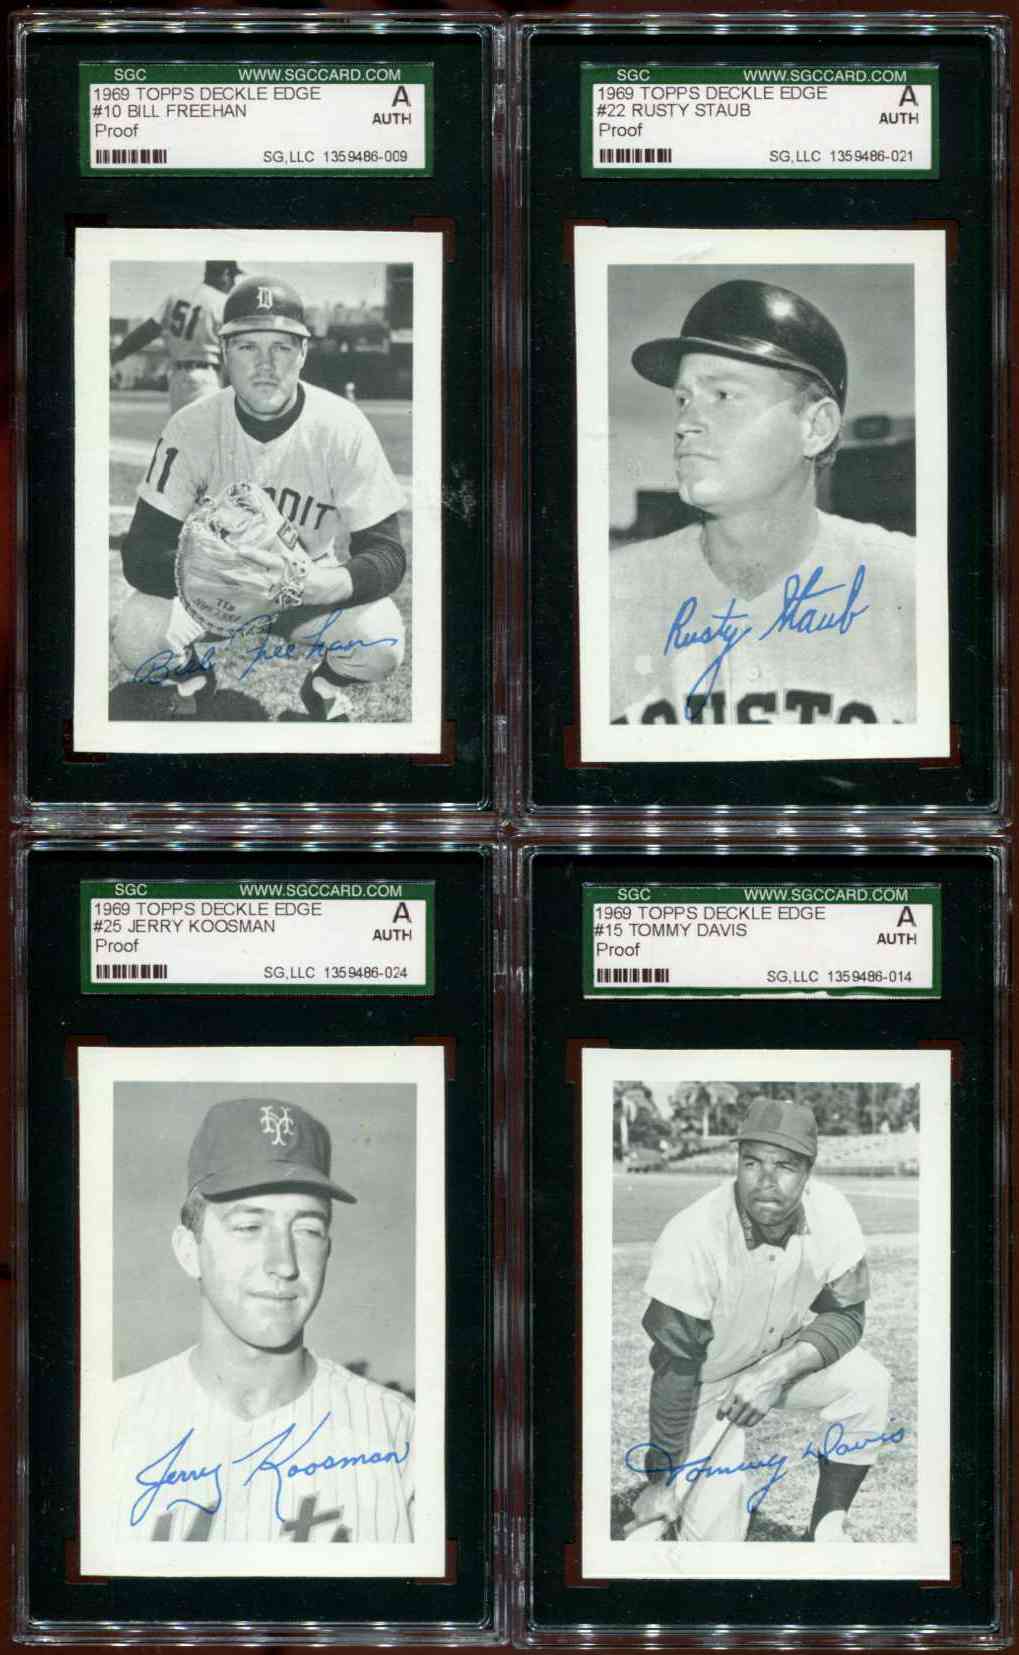 1969 Topps DECKLE EDGE  PROOF #22 Rusty Staub (Astros) Baseball cards value